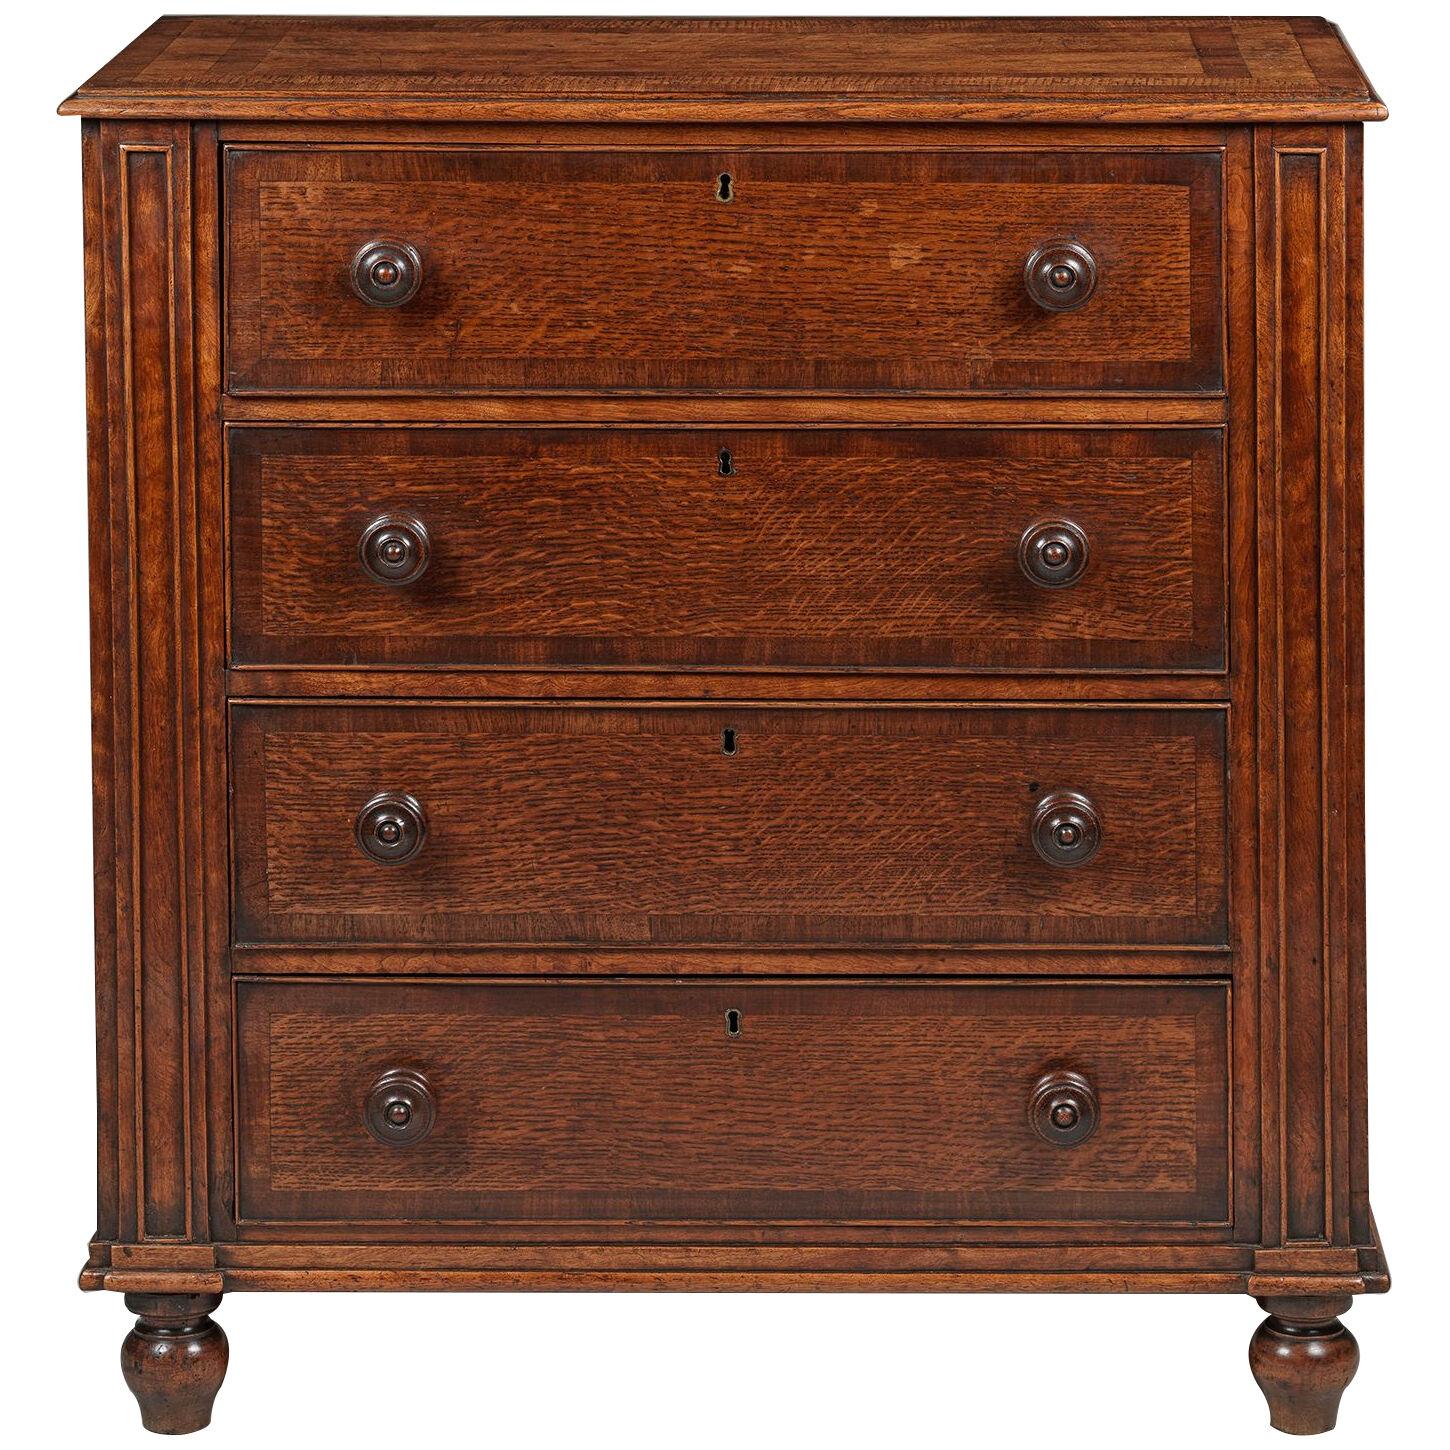 Regency period oak chest of drawers